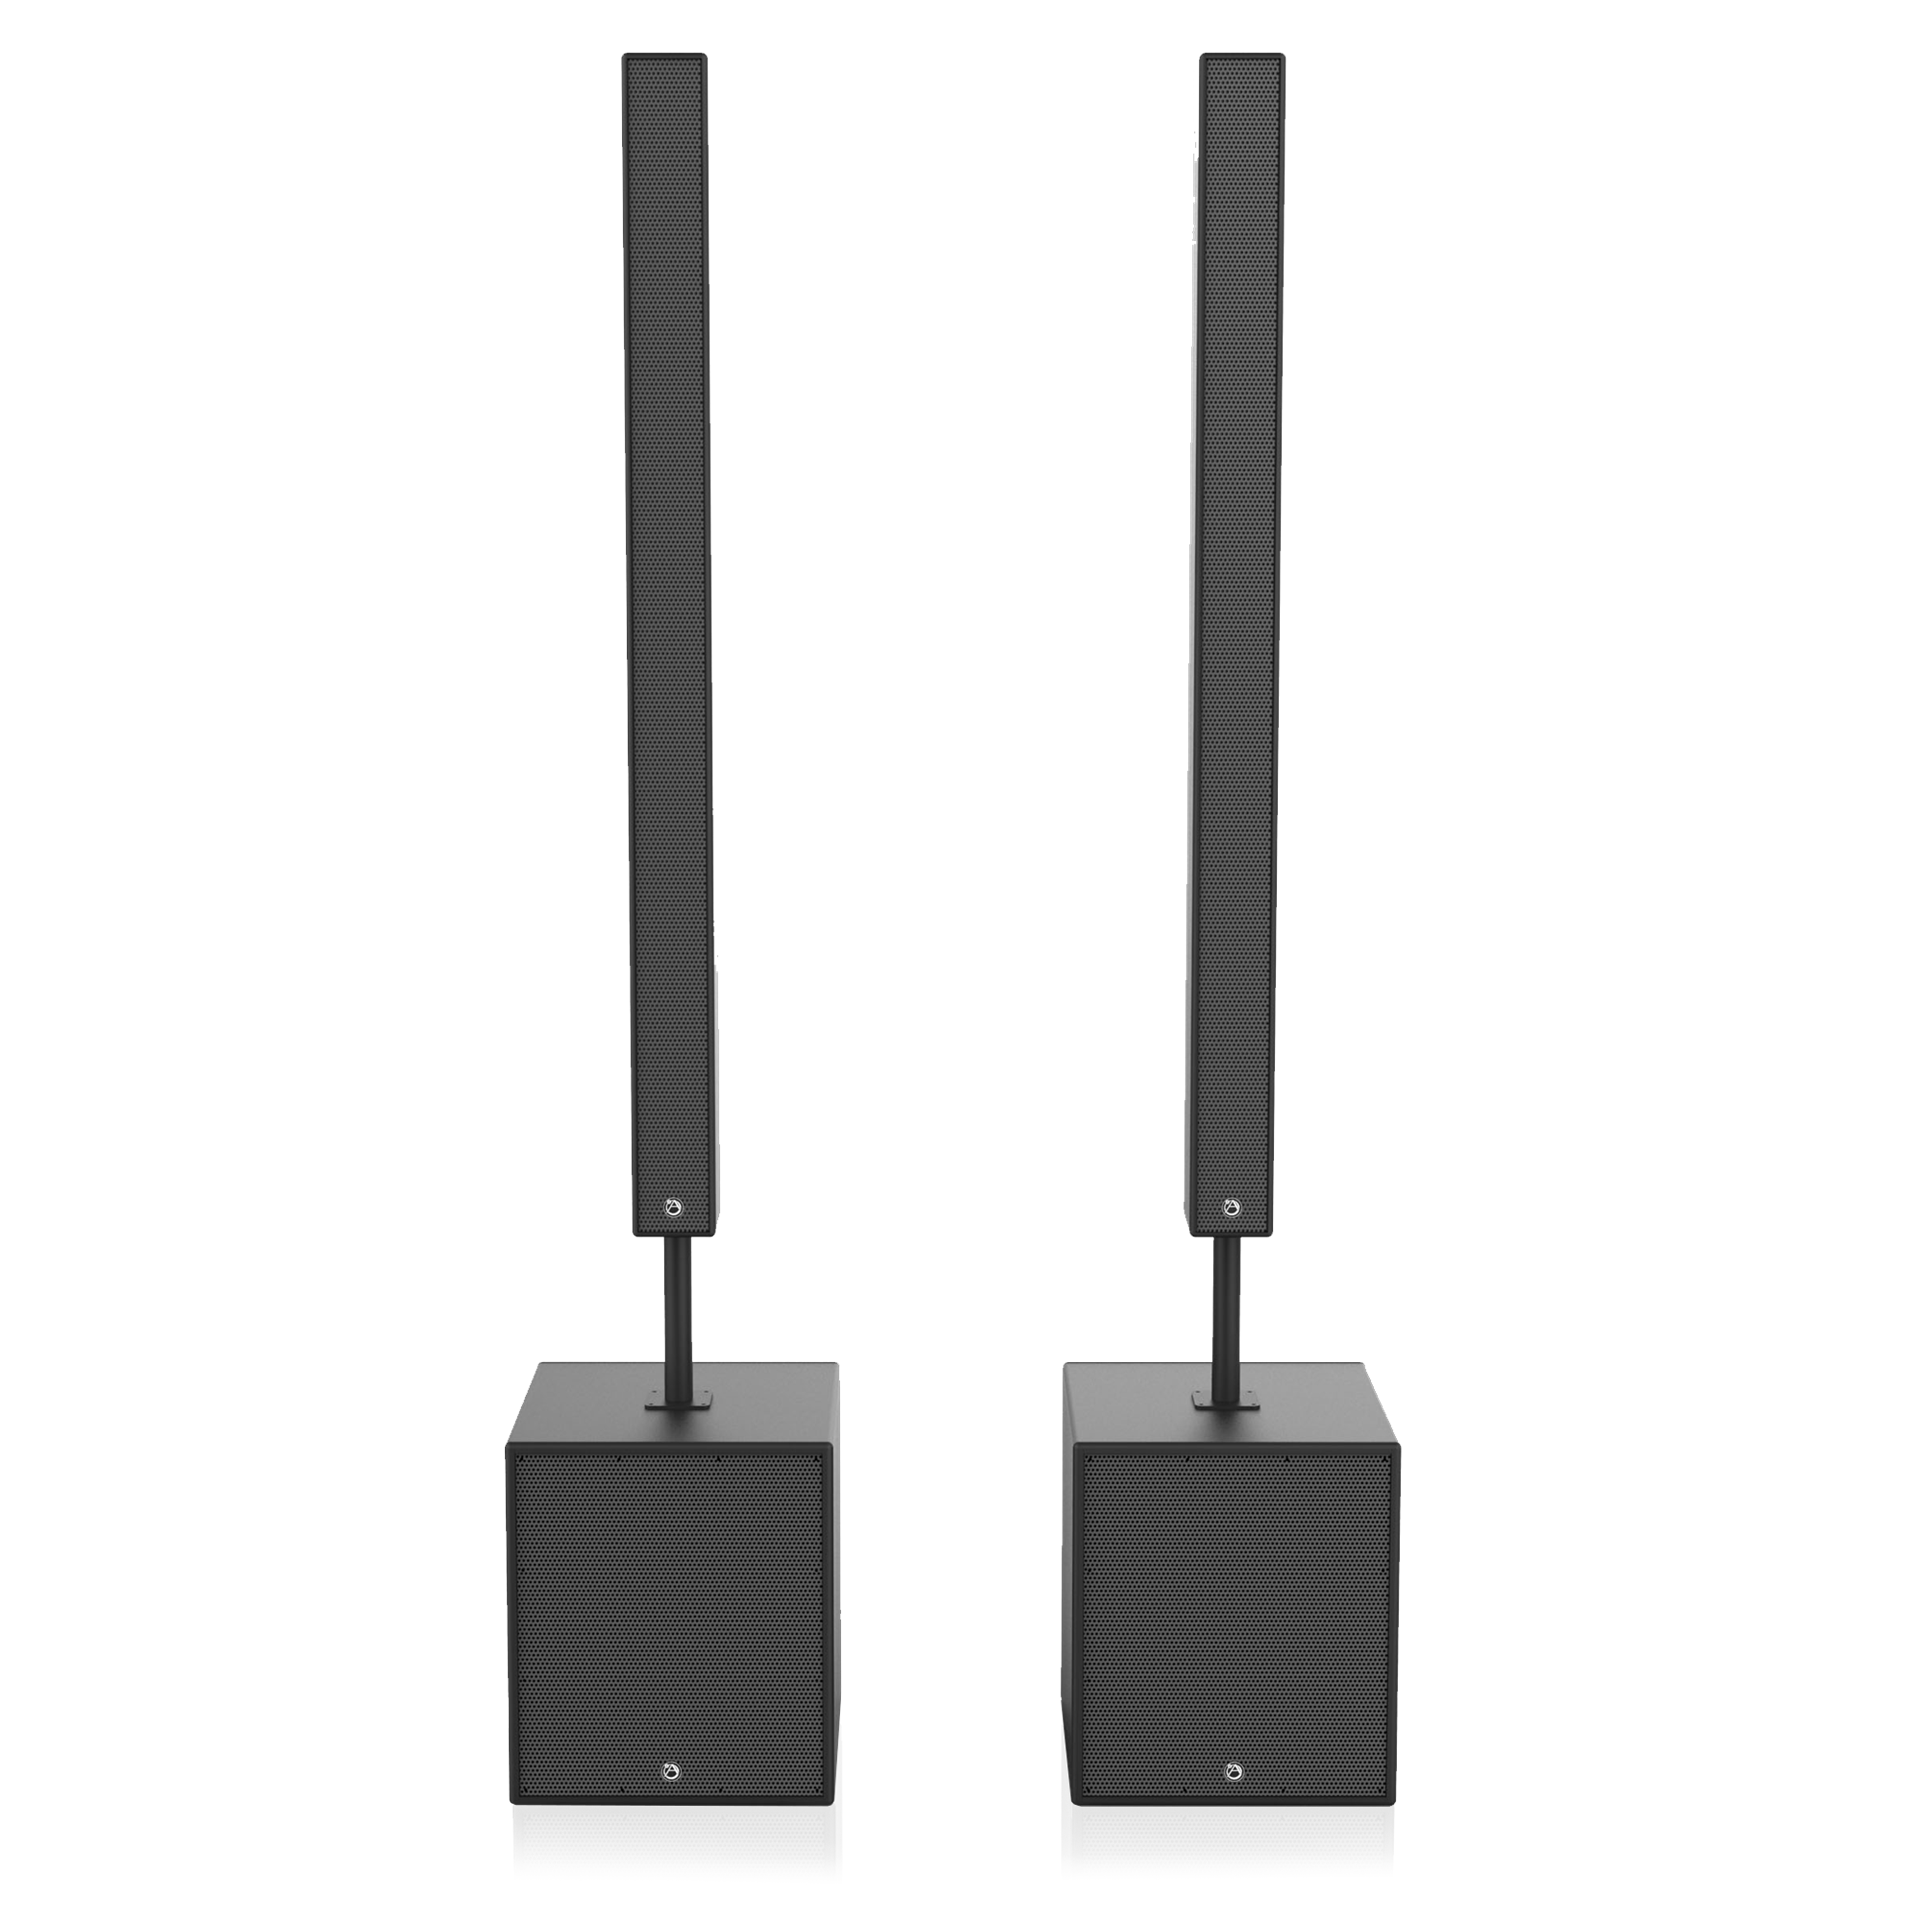 vertical array speakers